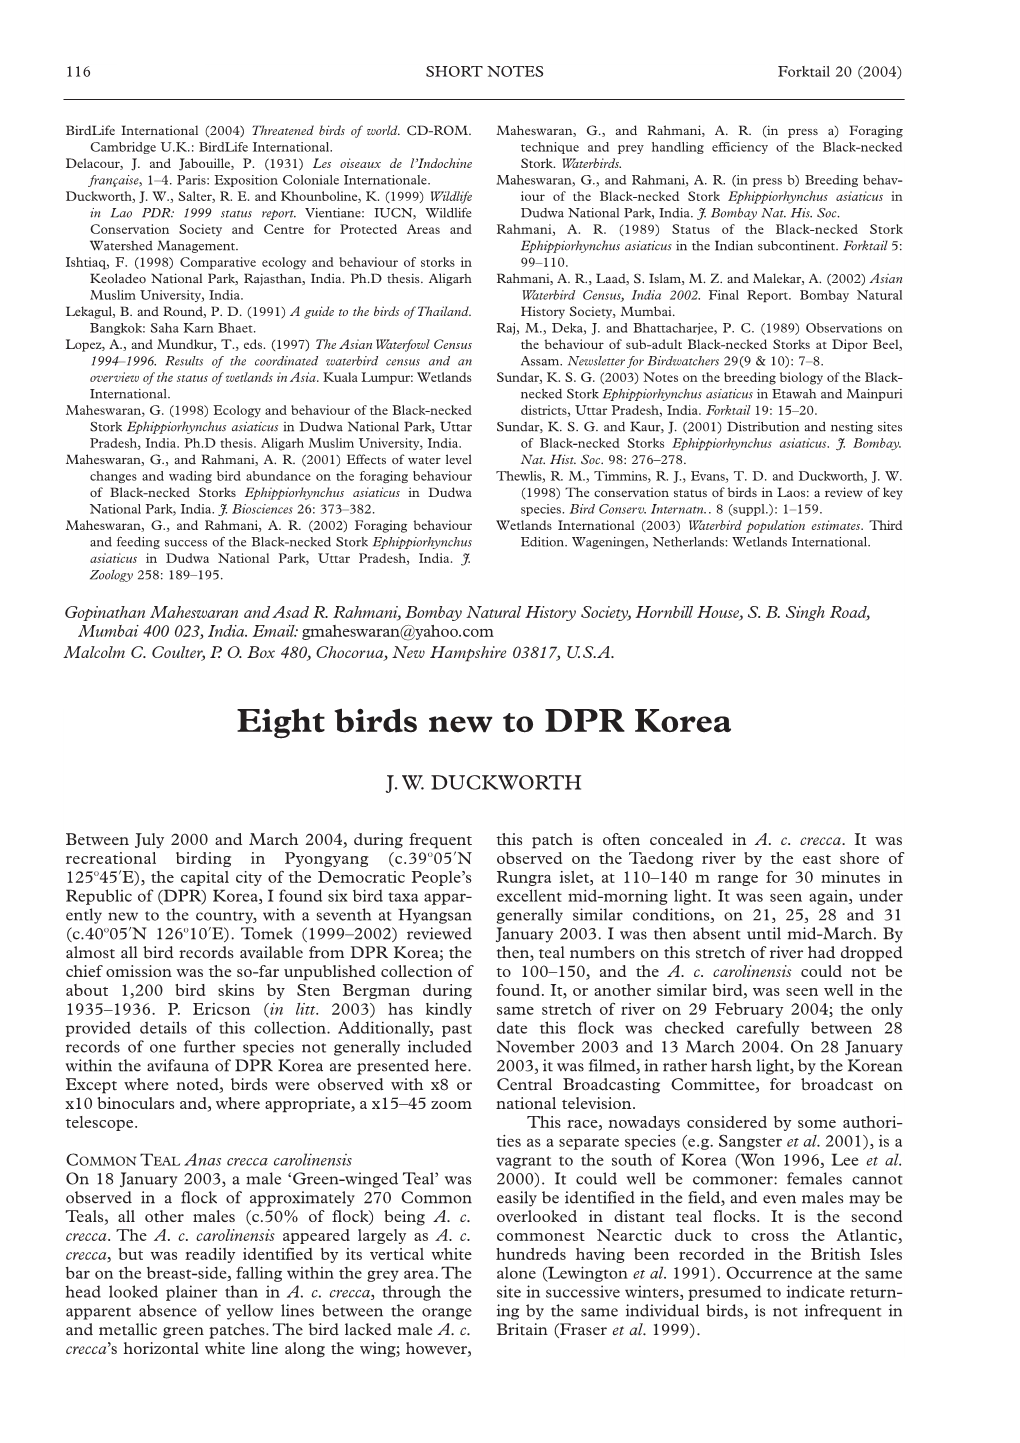 Eight Birds New to DPR Korea